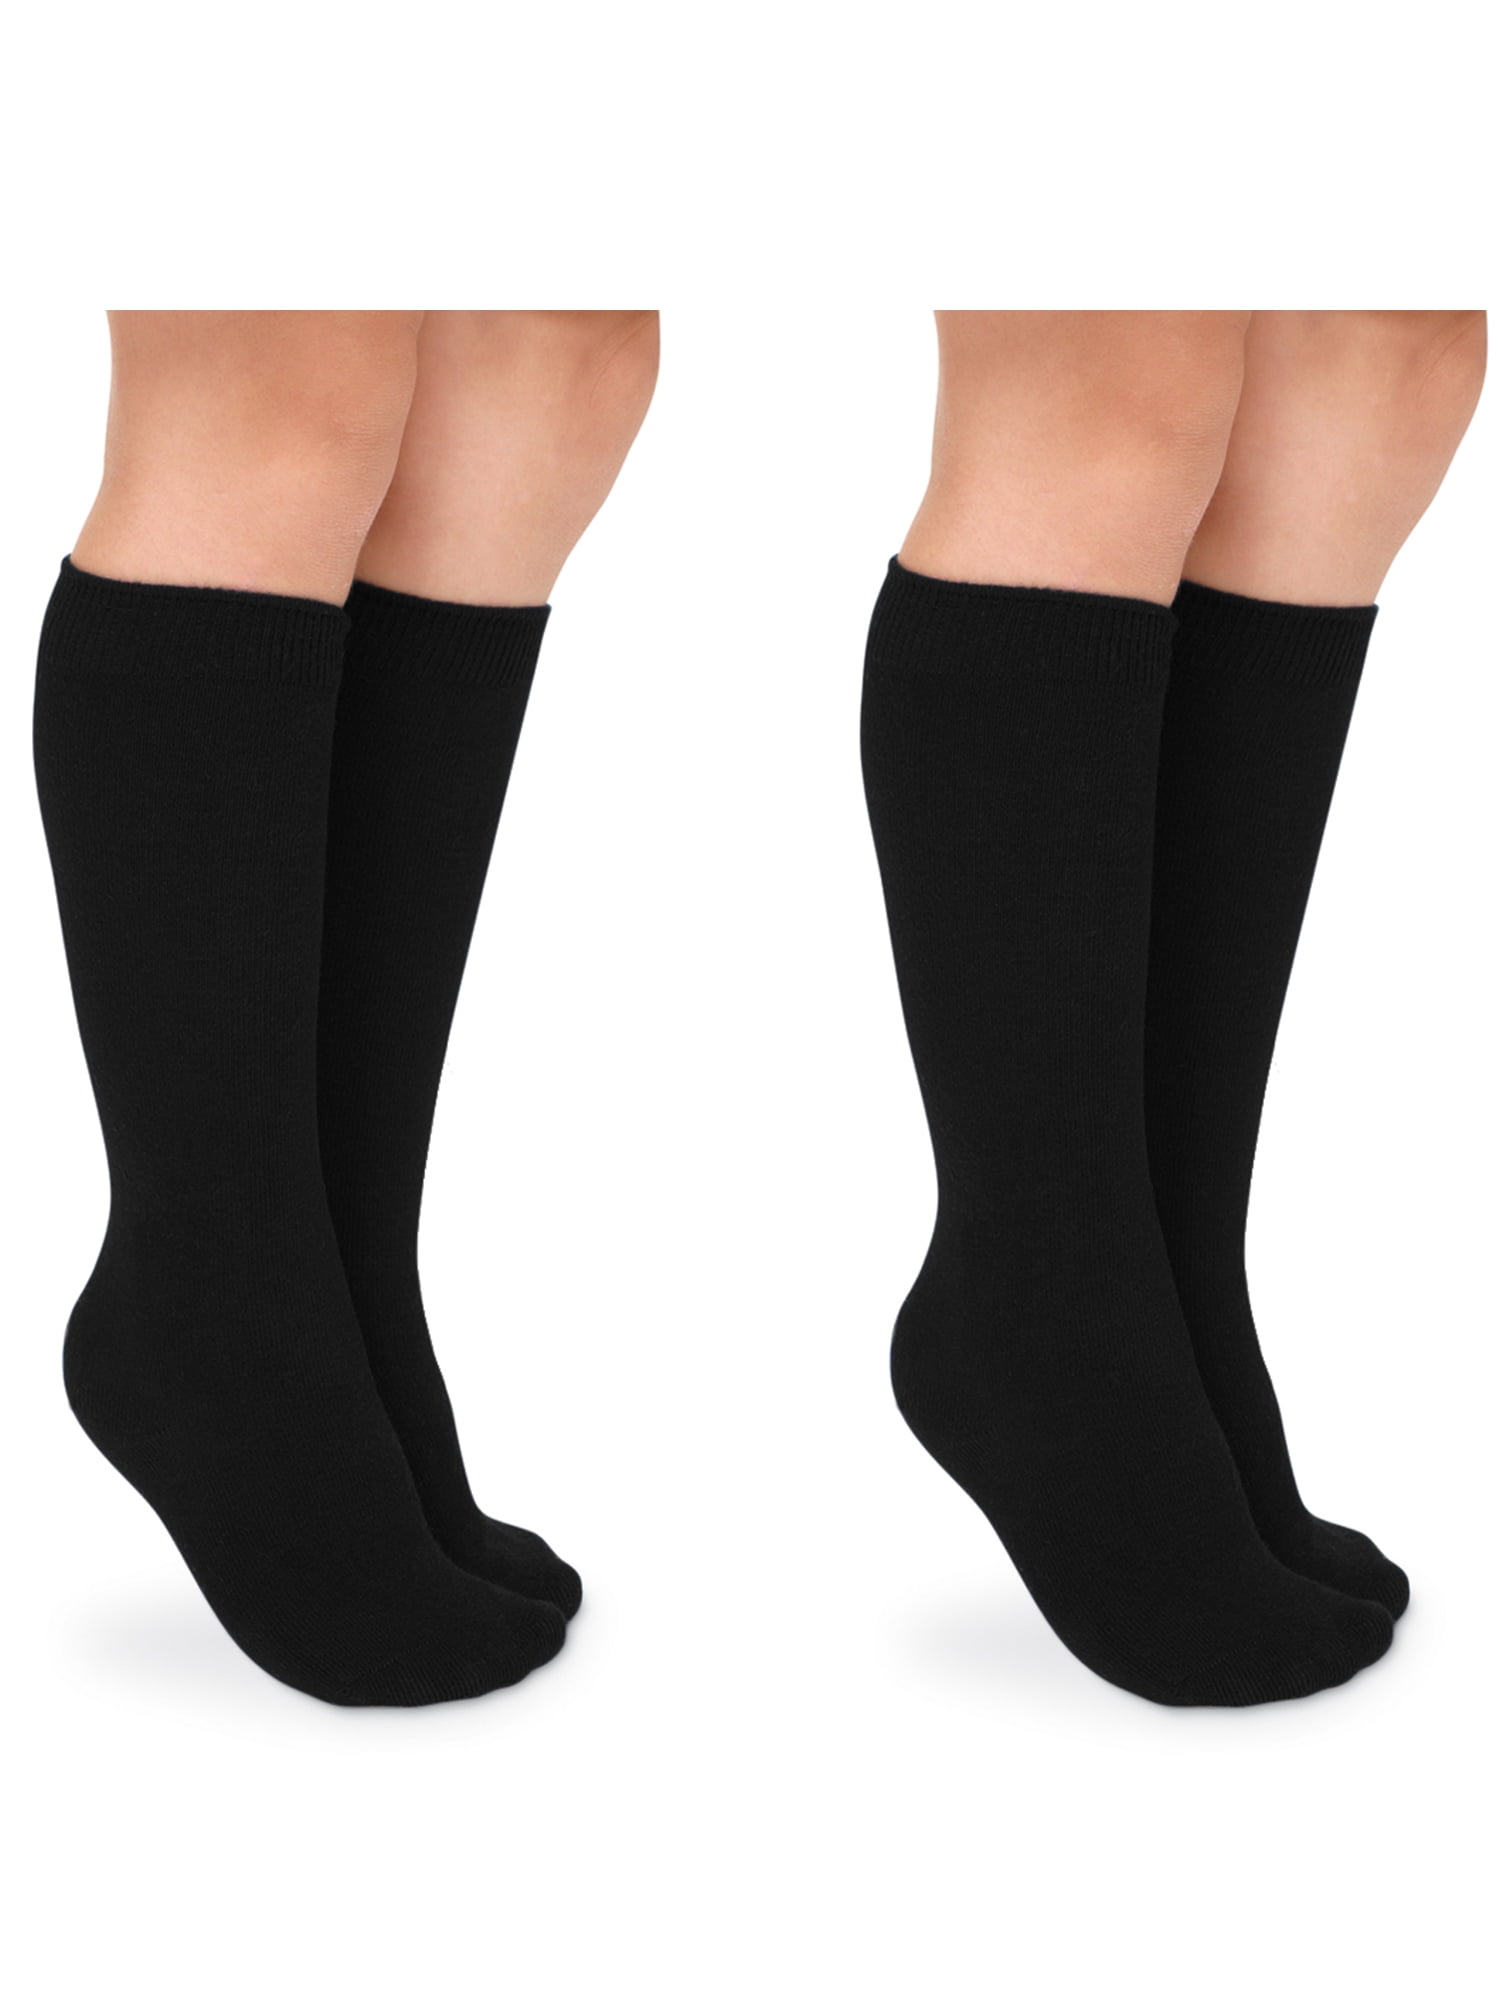 Jefferies Socks Girls School Uniform Cable Knit Knee High Socks 2 Pair Pack 